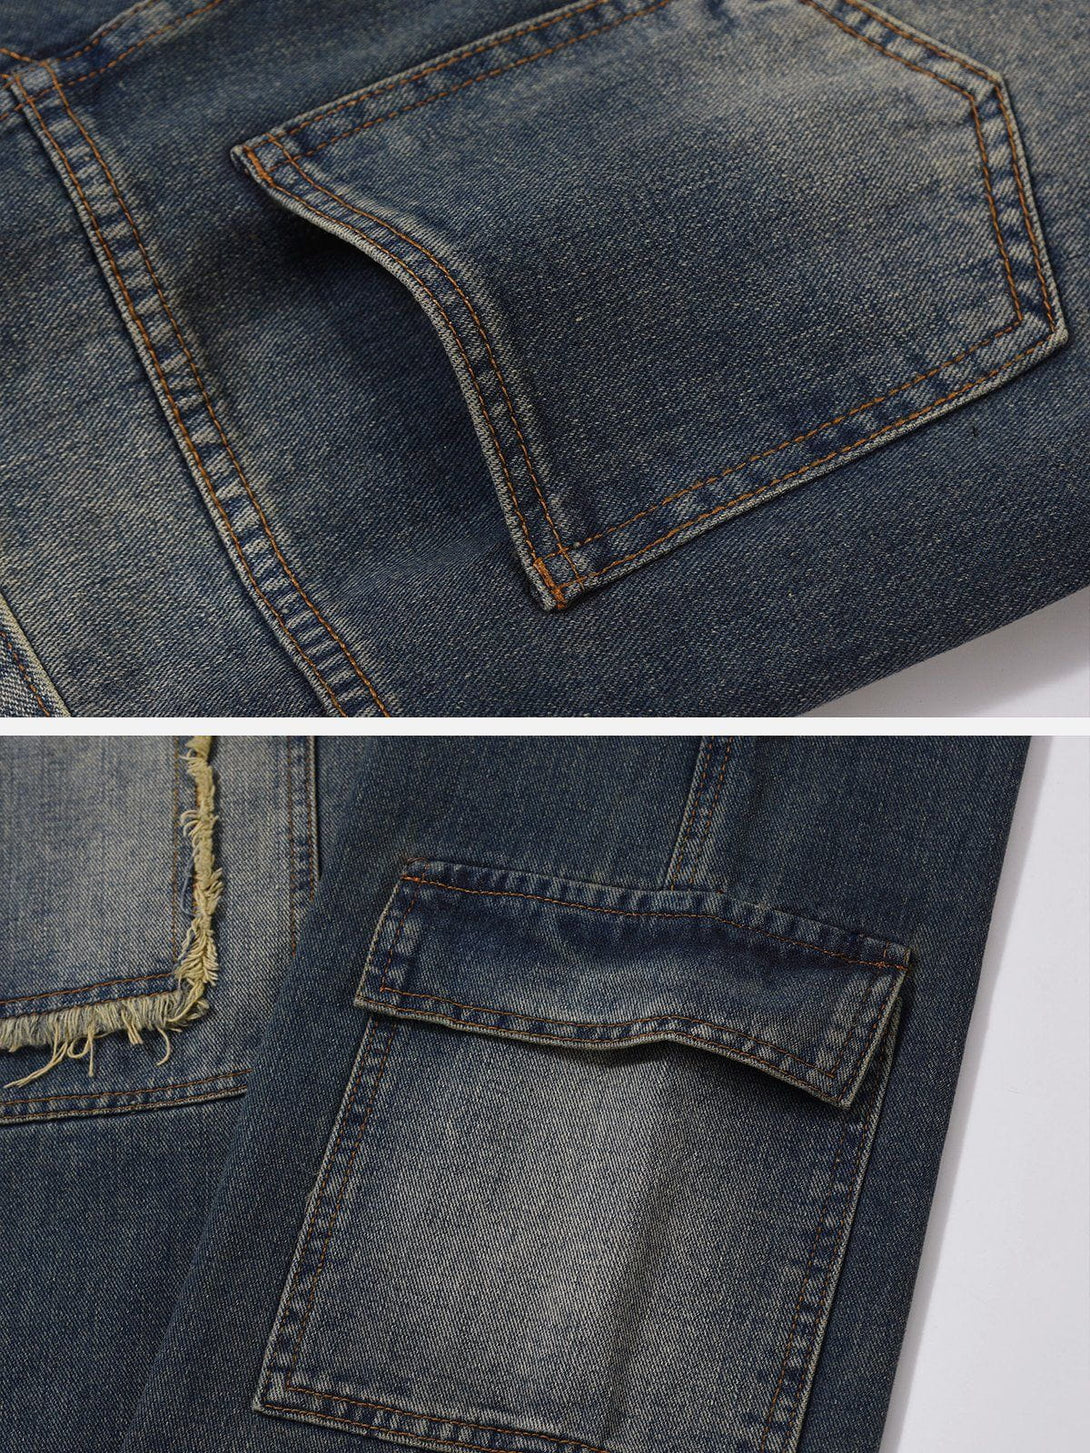 Levefly - Vintage Washed Multi-Pocket Raw Jeans - Streetwear Fashion - levefly.com